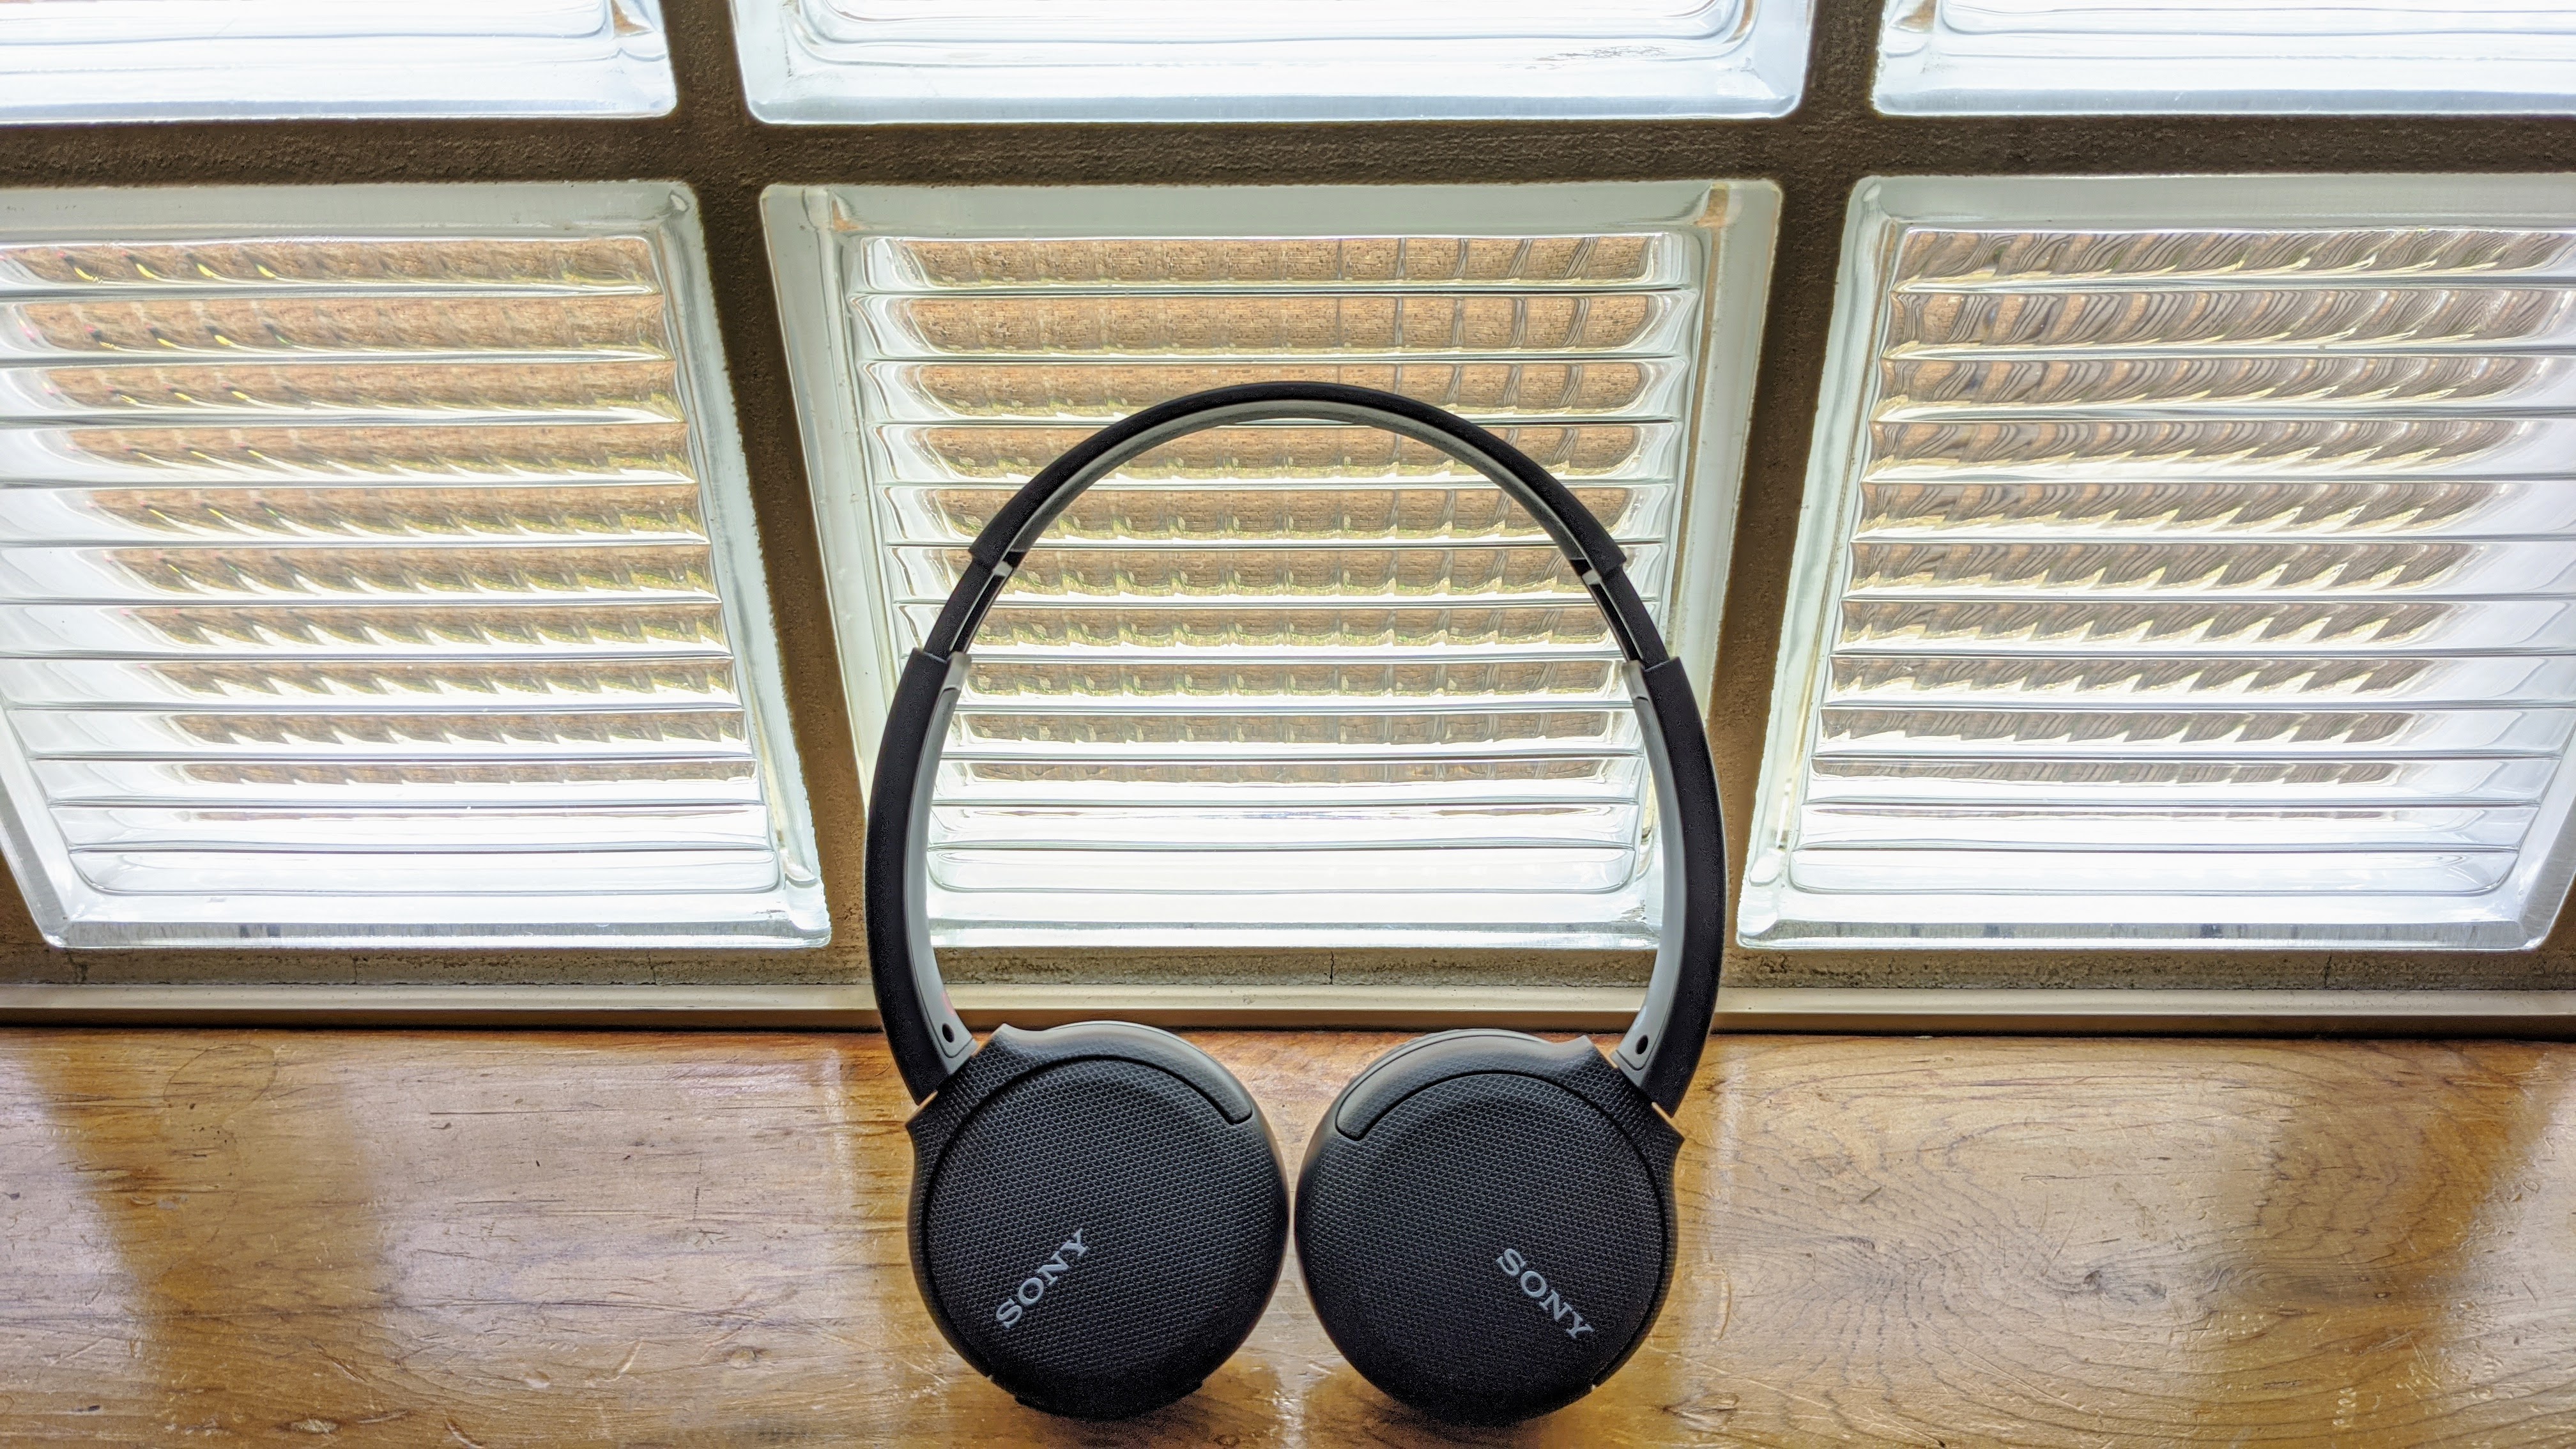 Sepasang headphone on-ear Sony WH-CH510 berwarna hitam di sebelah jendela di permukaan kayu